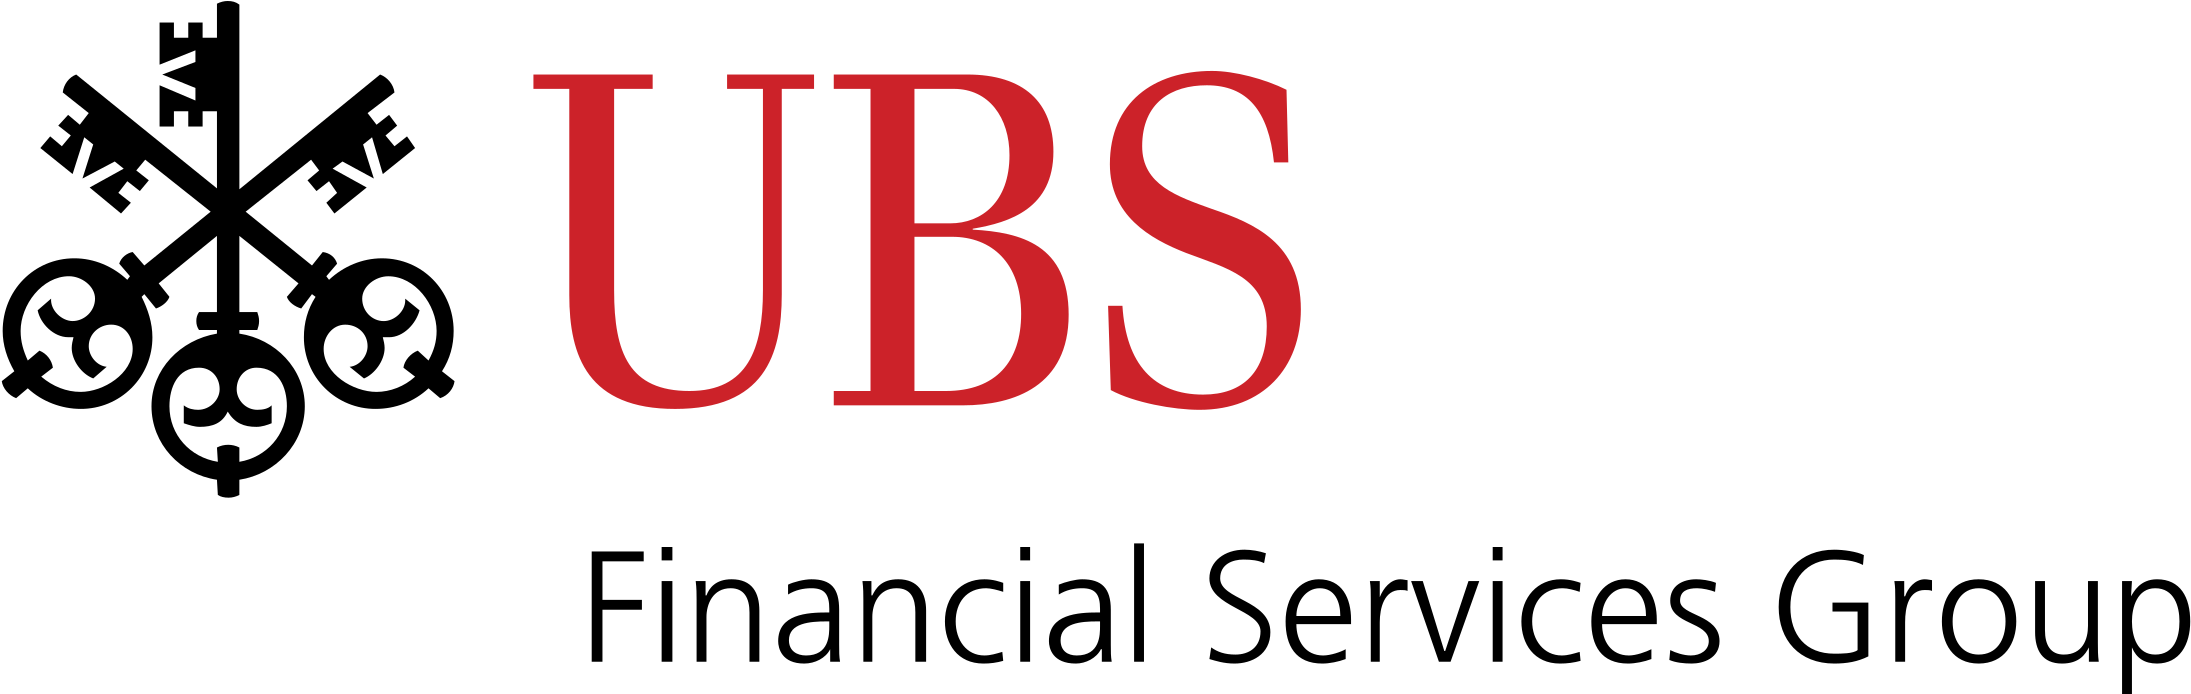 Download Ubs Logo Png Transparent - Ubs Financial Services Logo PNG